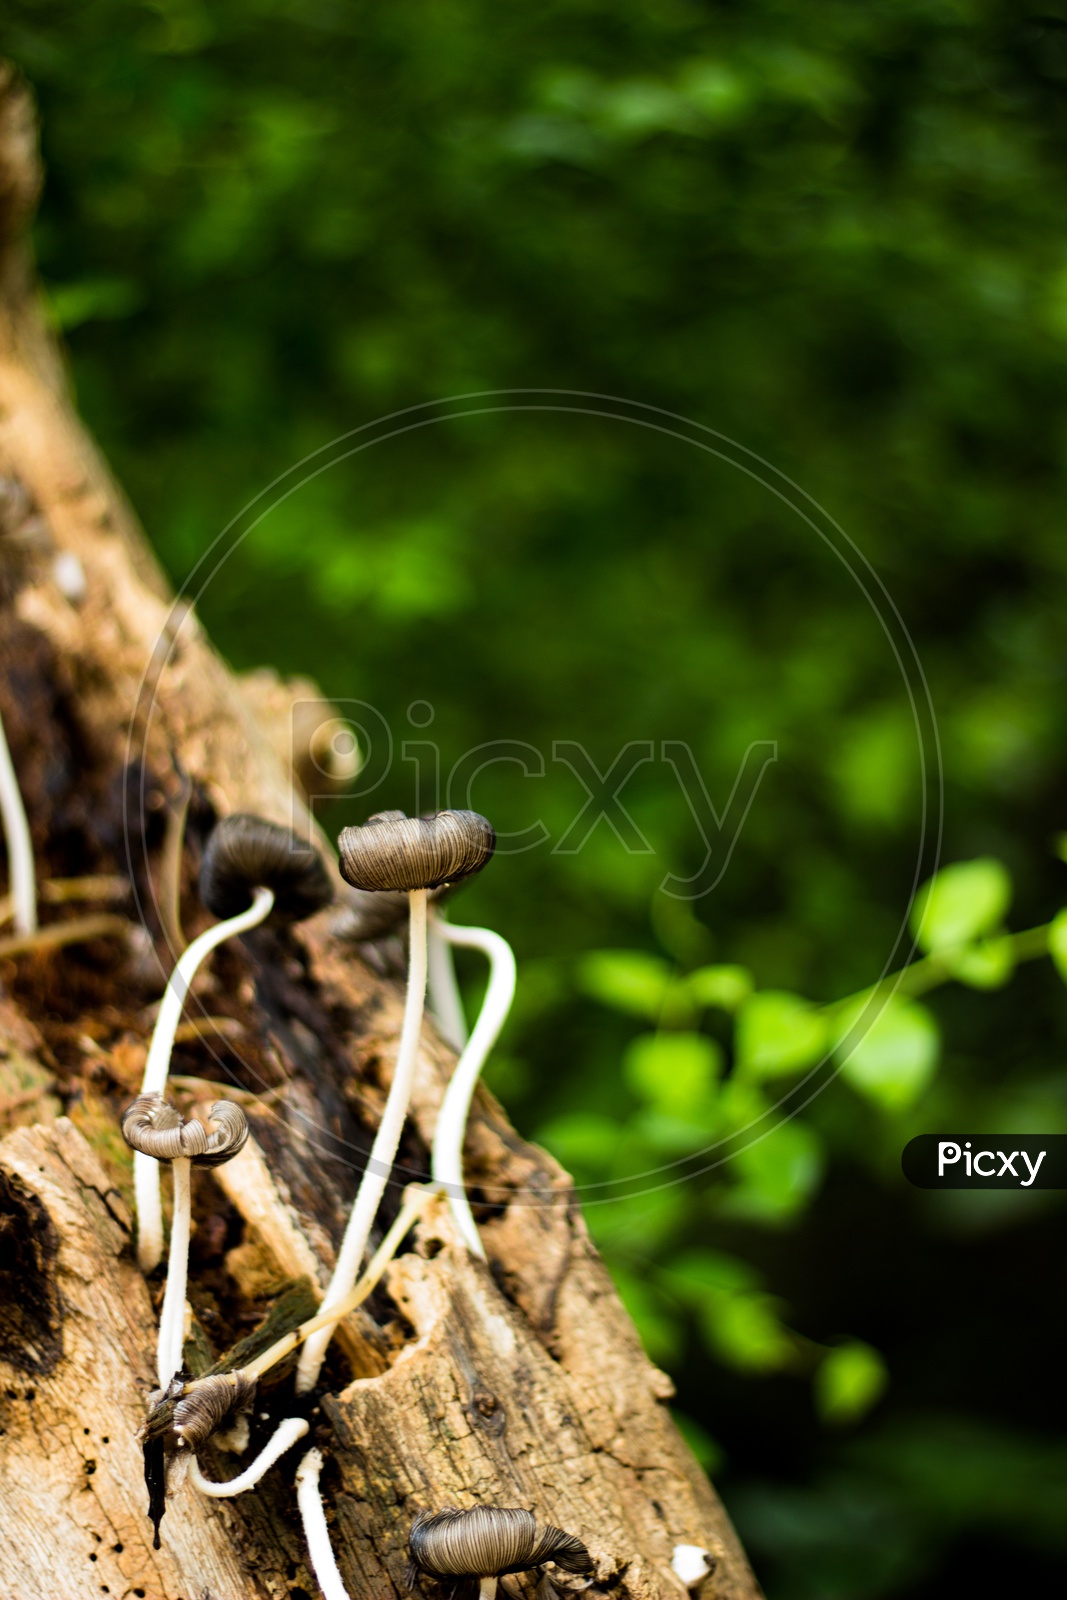 Wild mushrooms growing on a tree trunk during rain in monsoon season